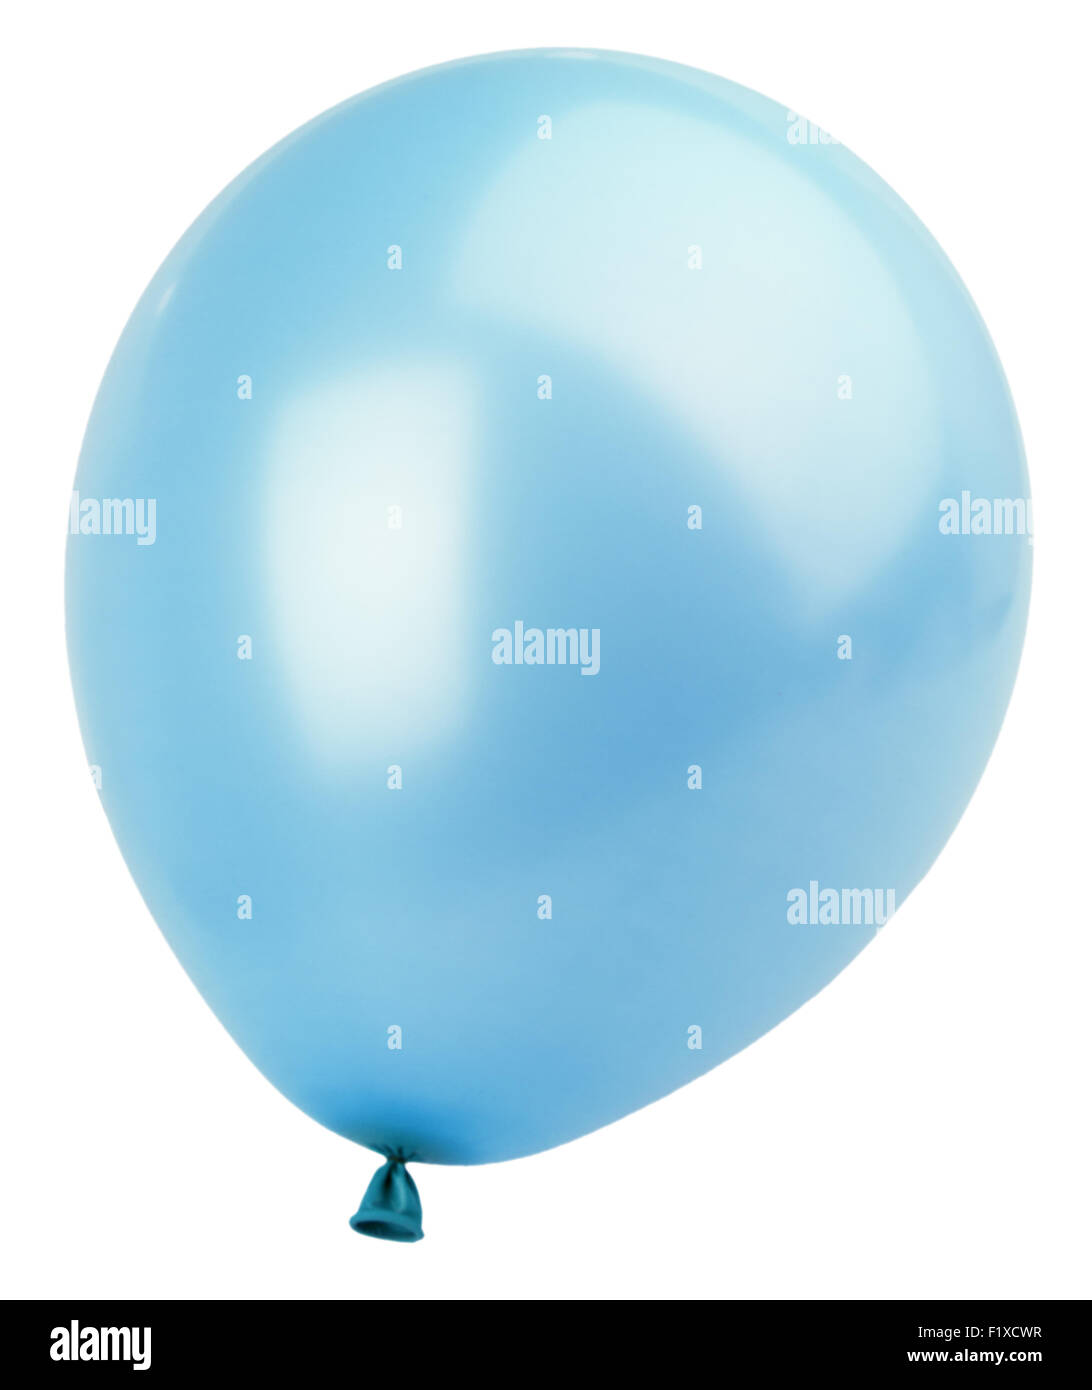 Blue Streamer Balloon Tails, Blue Balloon Strings, Blue Birthday